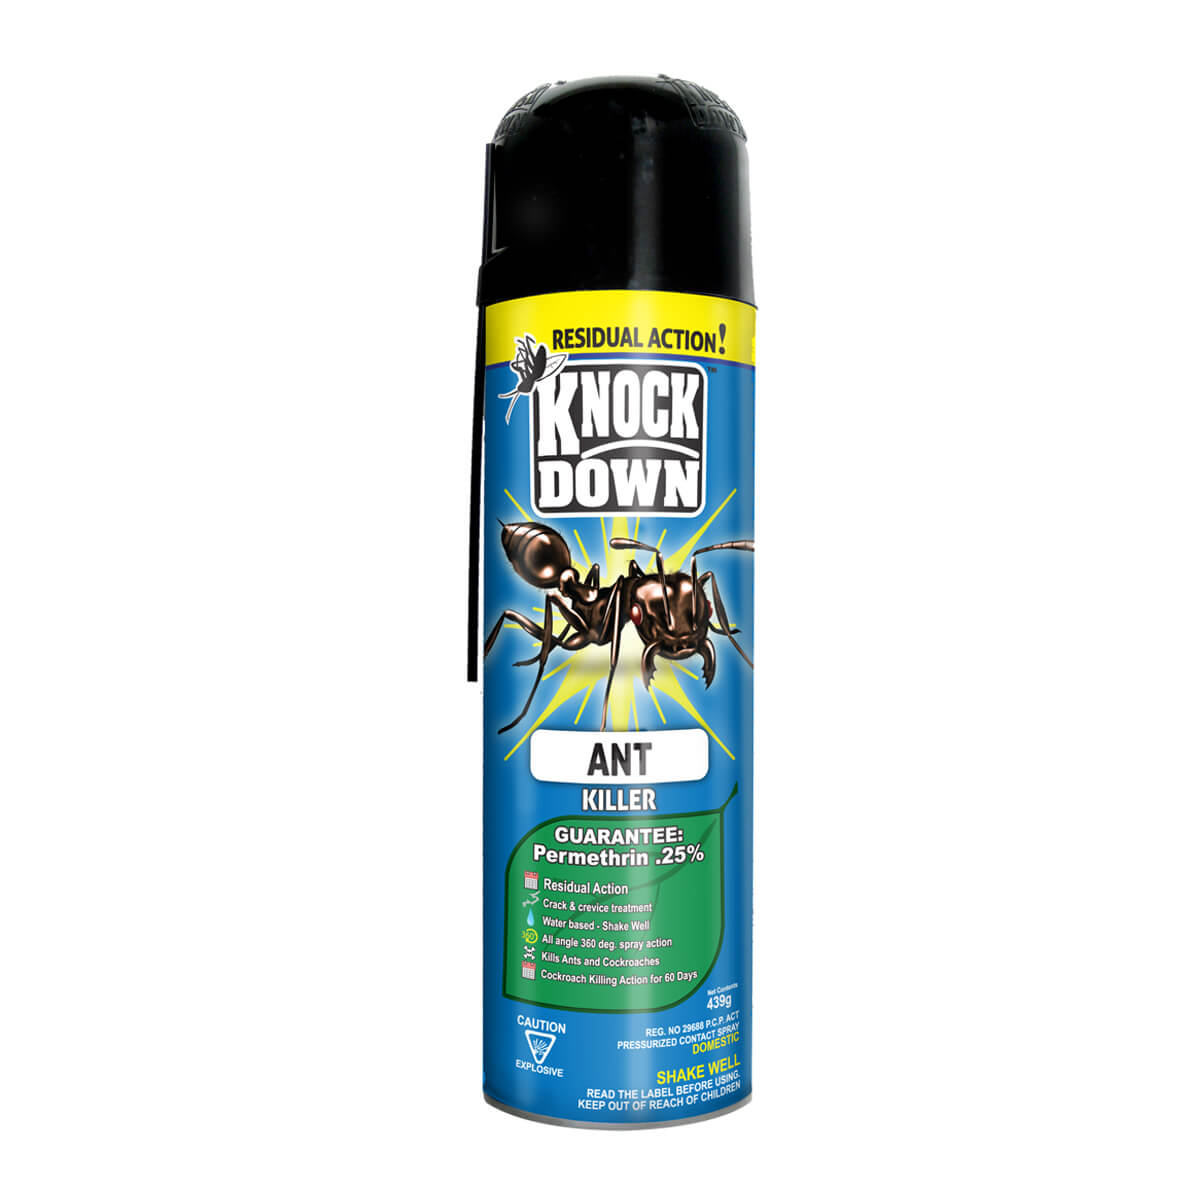 Knock Down Ant Killer - 60 day residual - 439 g